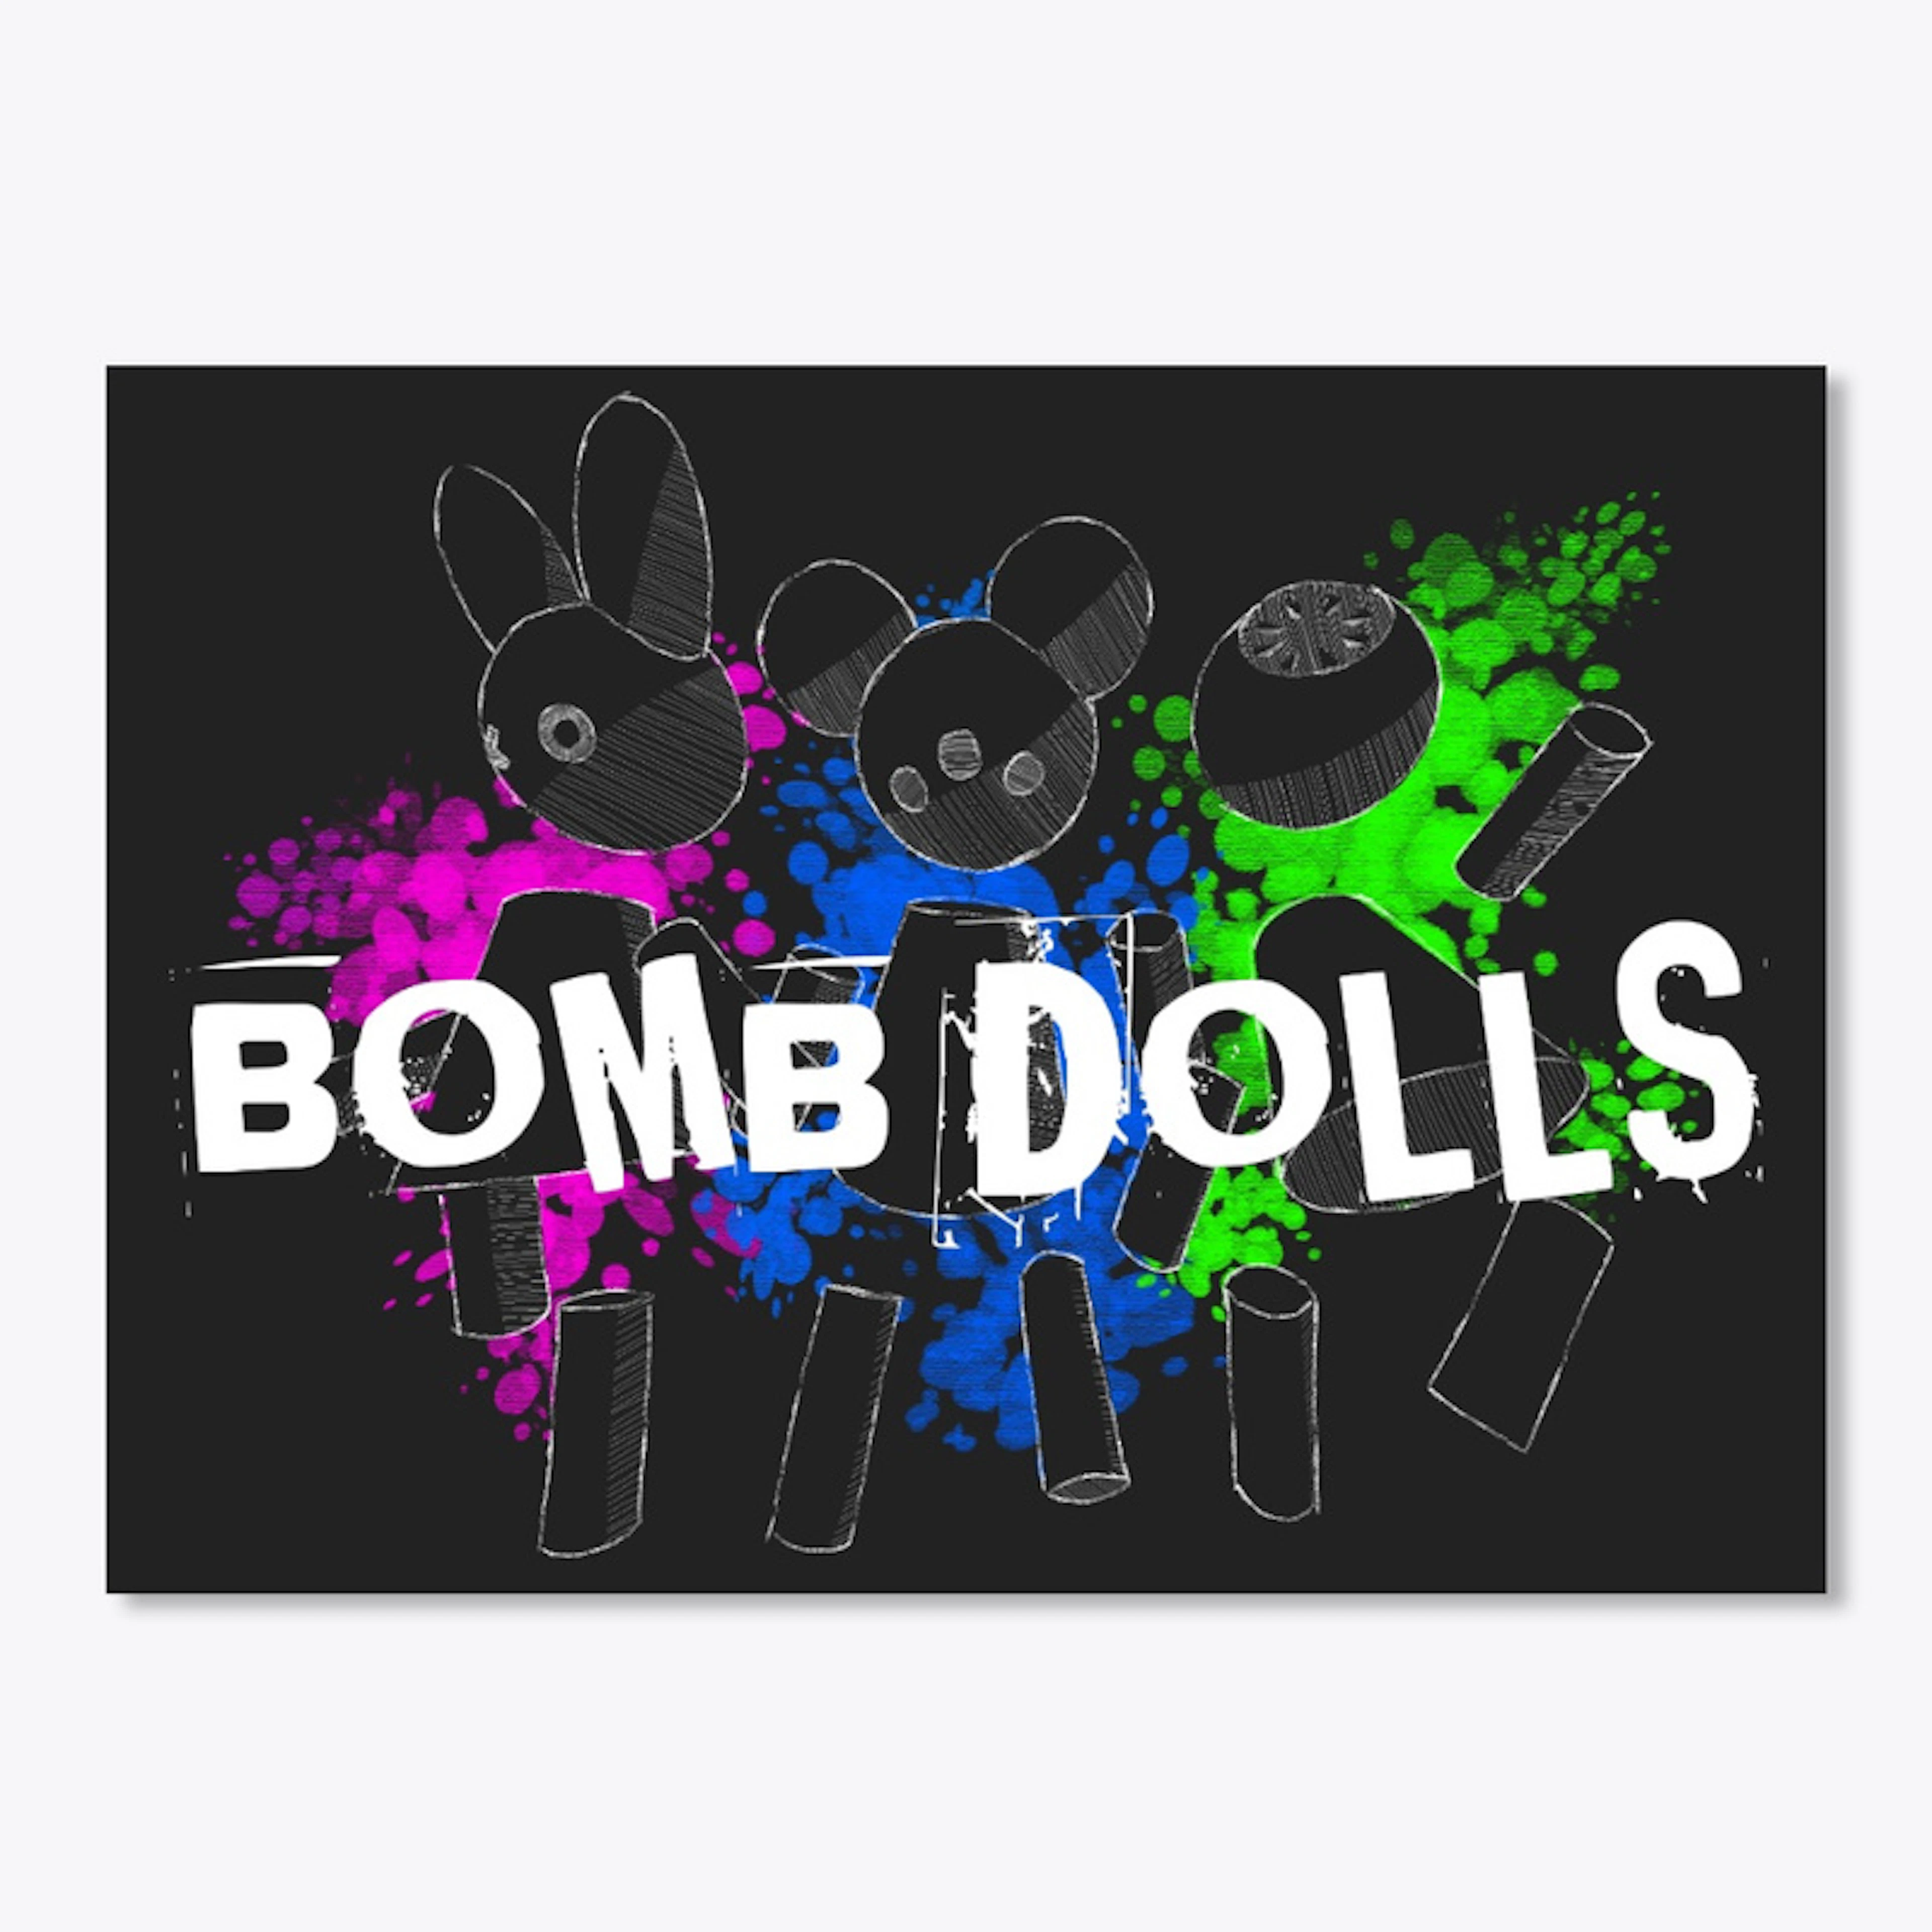 its bombed dolls baby! (dark)